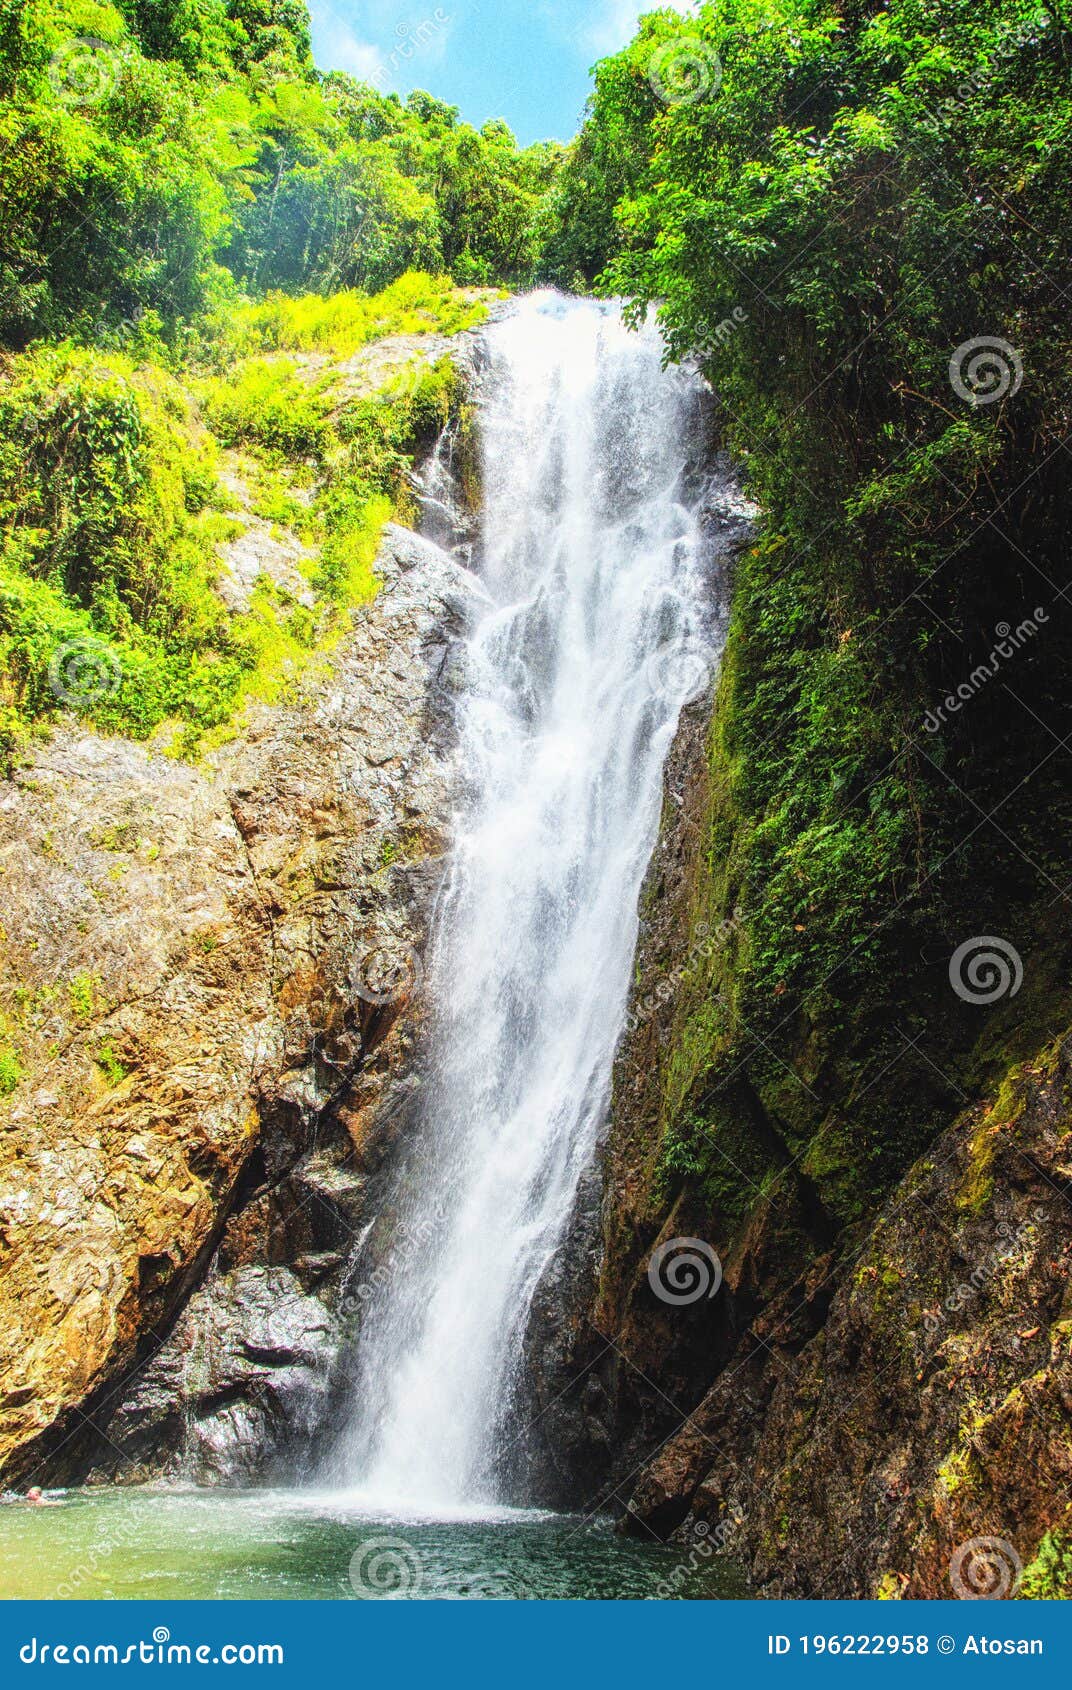 the biausevu waterfall